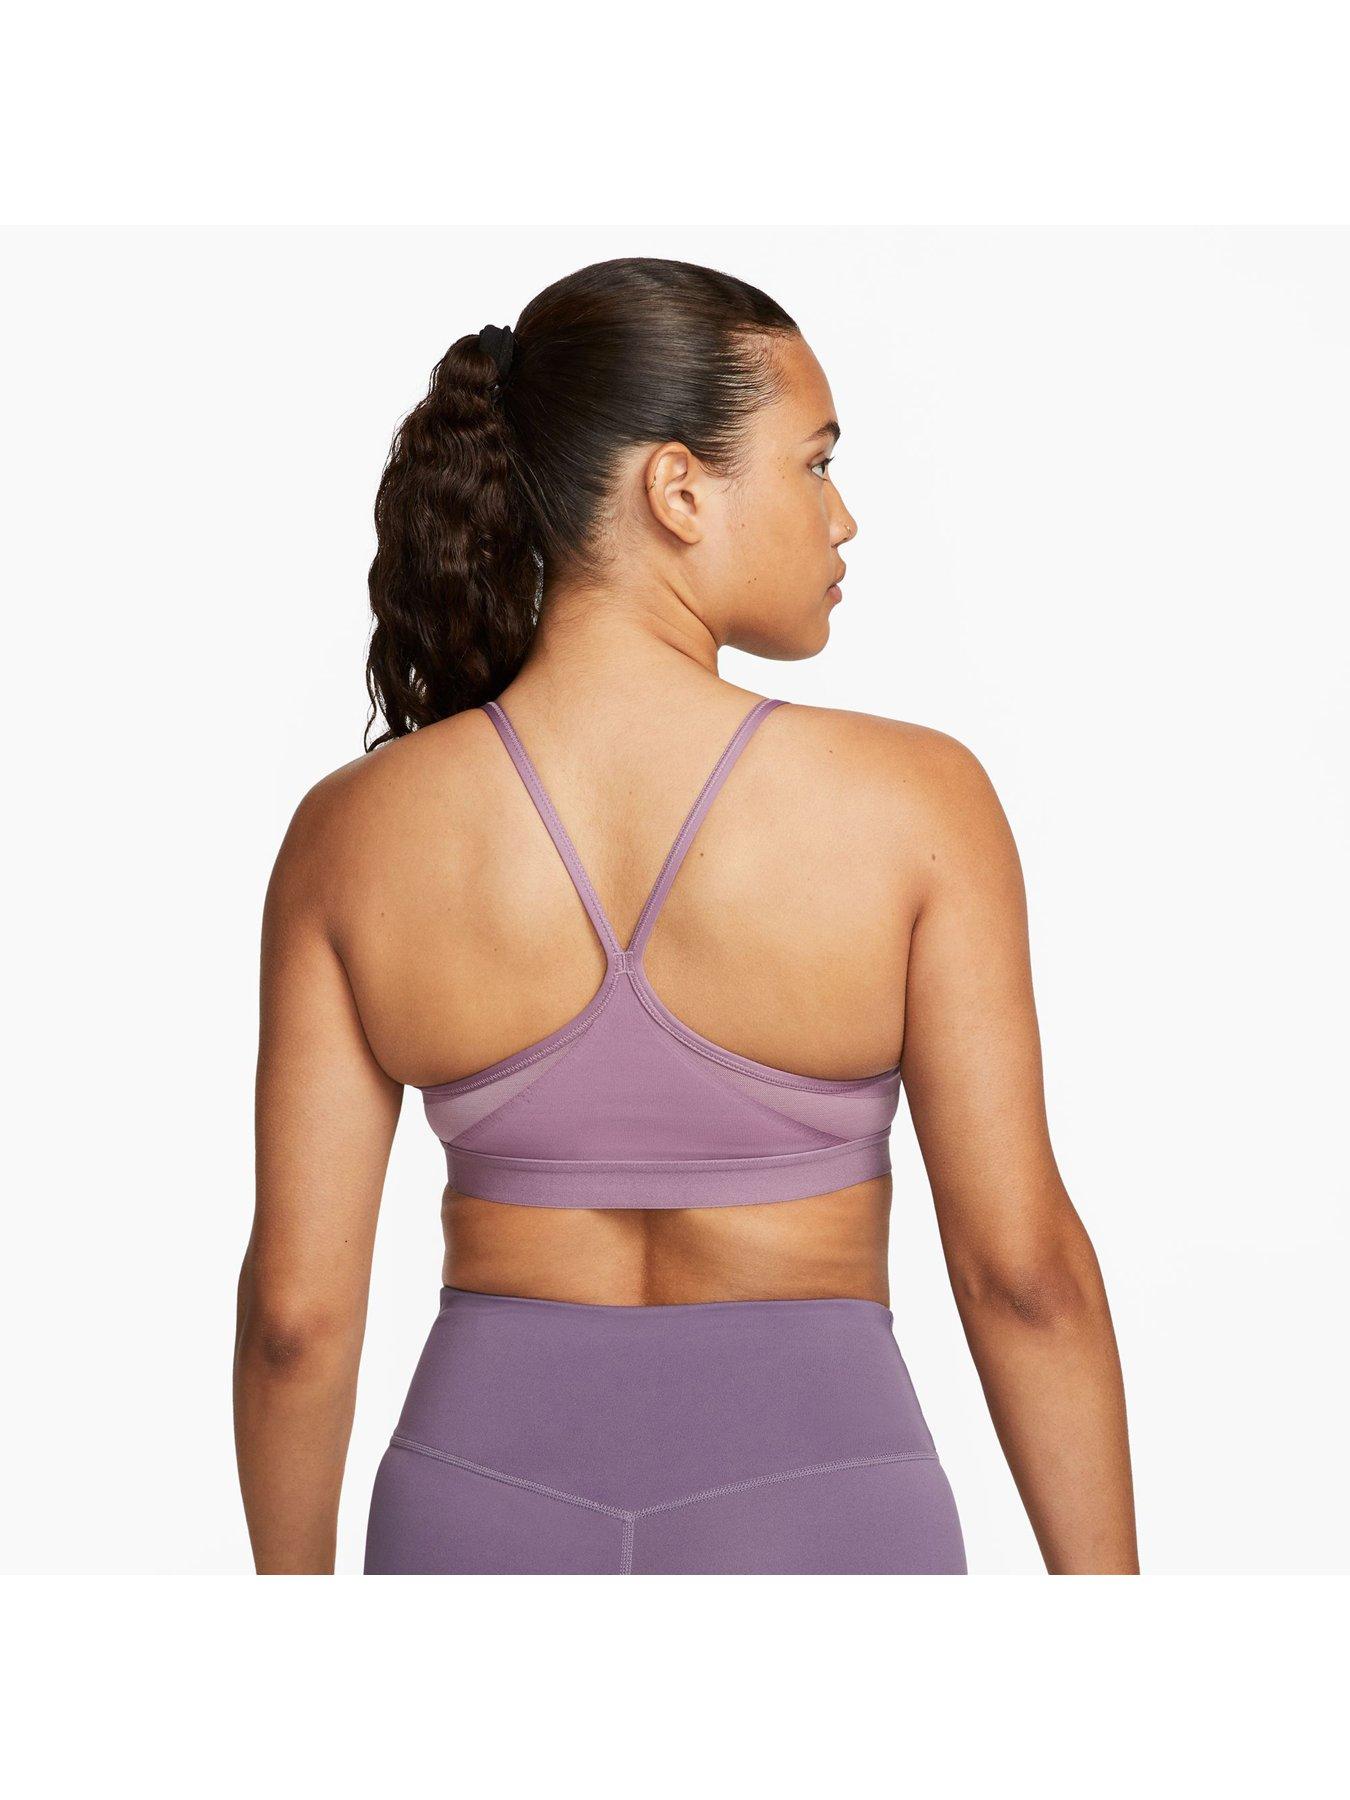 Buy Nike Women's Pro Indy Sports Bra (X-Small, Pink Glow) at